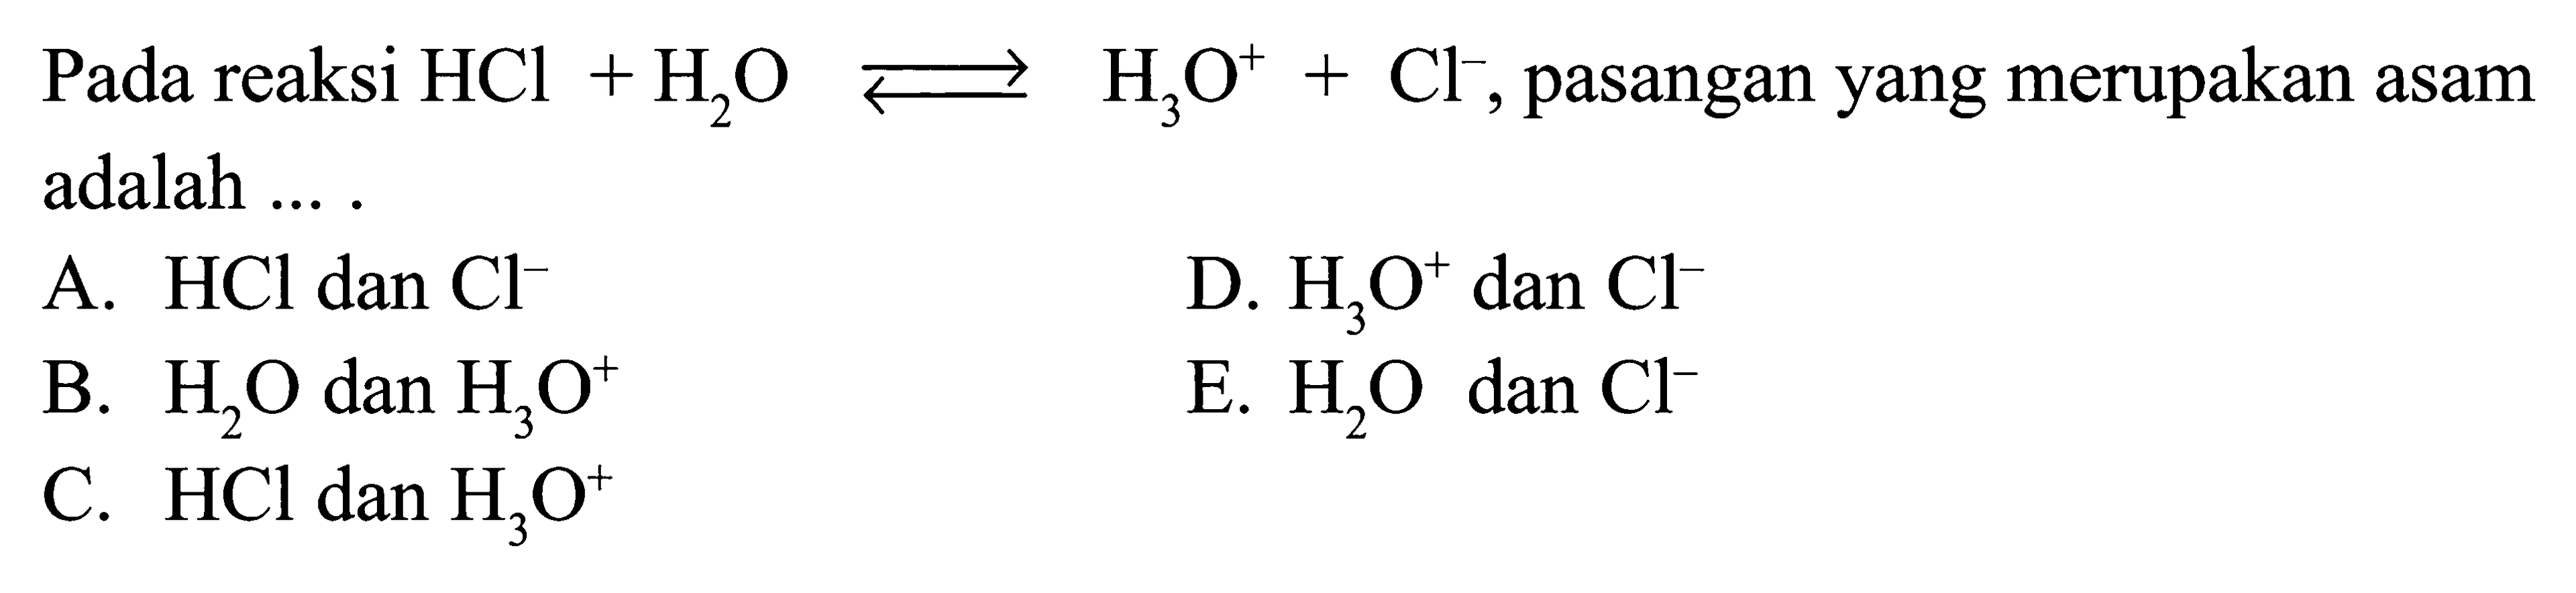 Pada reaksi  HCl+H2O <=> H3O^+ +Cl^-, pasangan yang merupakan asam adalah ....     A.  HCl dan Cl^-   B.  H2O dan H3O^+C.  HCl dan H3O^+ D.  H3O^+ dan Cl^-E.  H2O dan Cl^-  